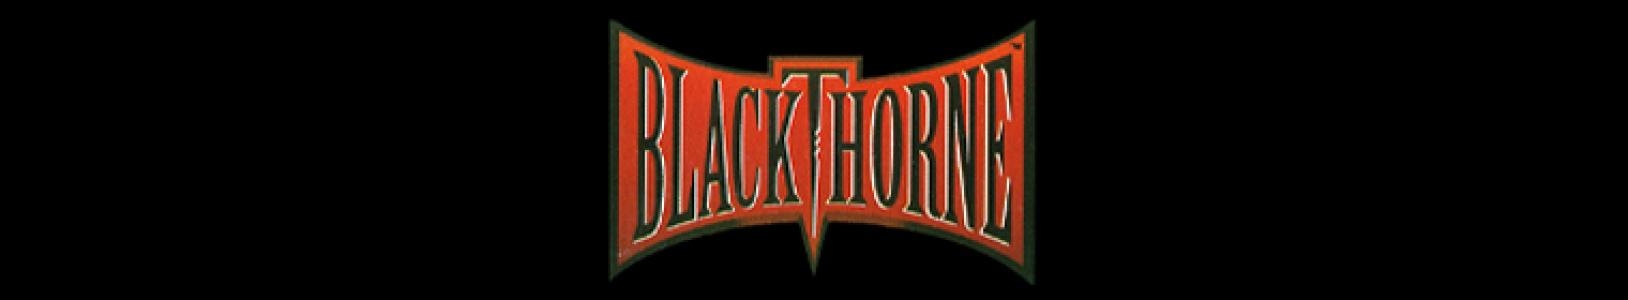 Blackthorne banner